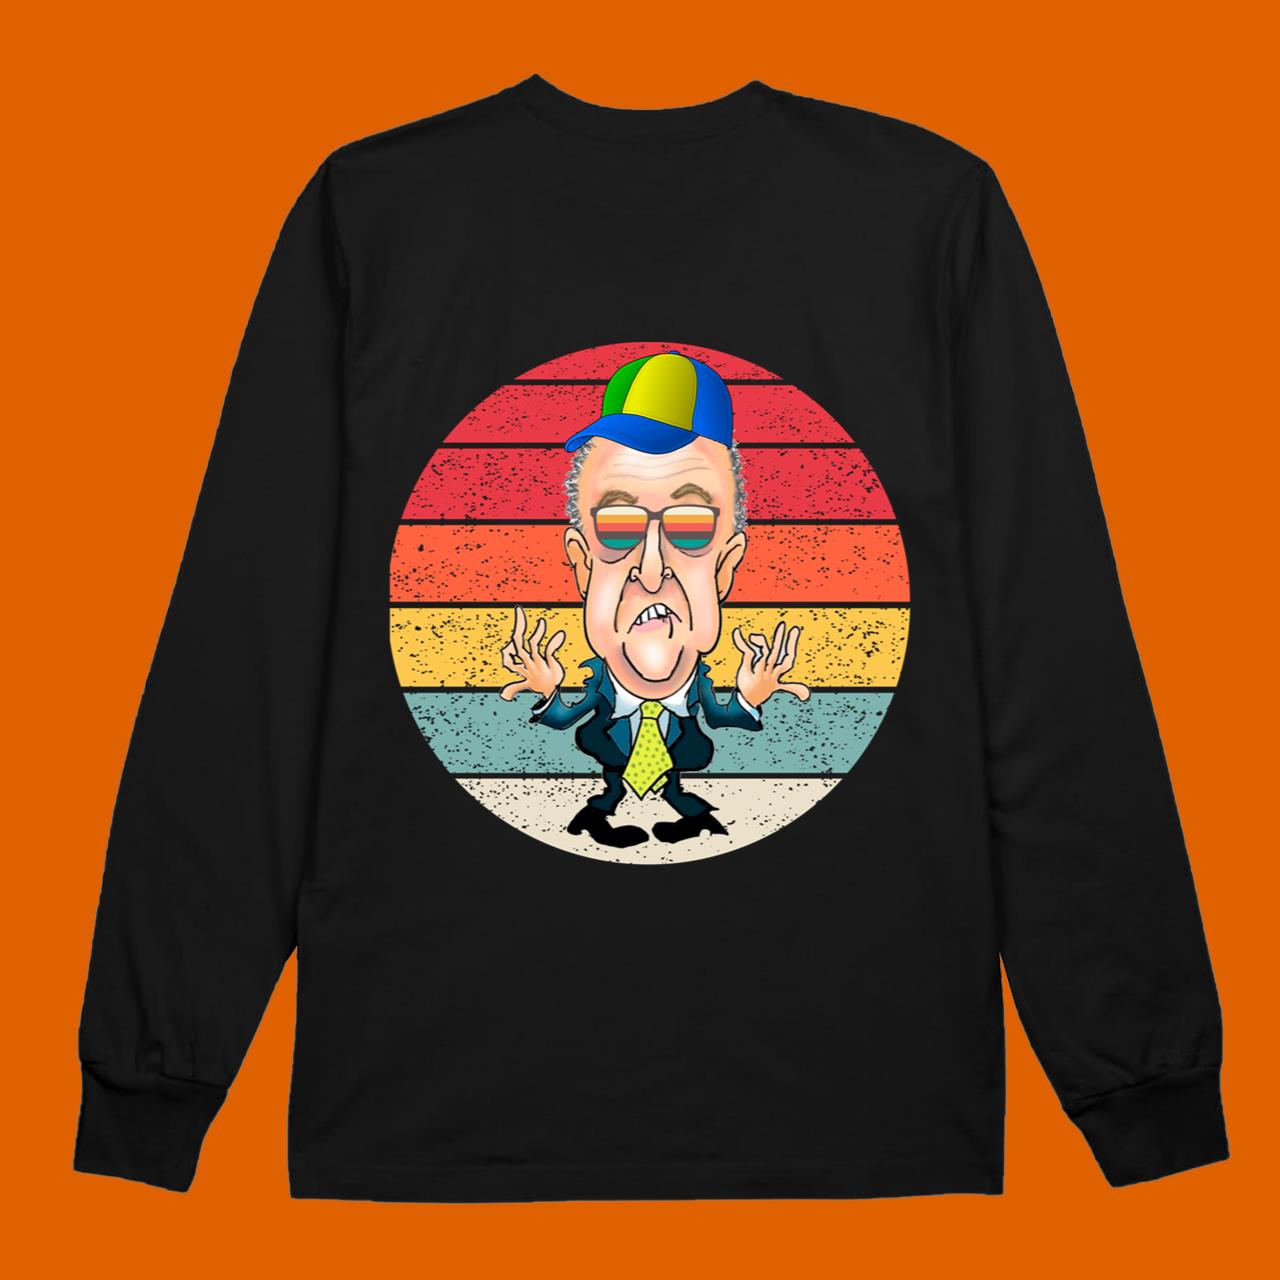 Funny Rudy Giuliani Classic T-Shirt